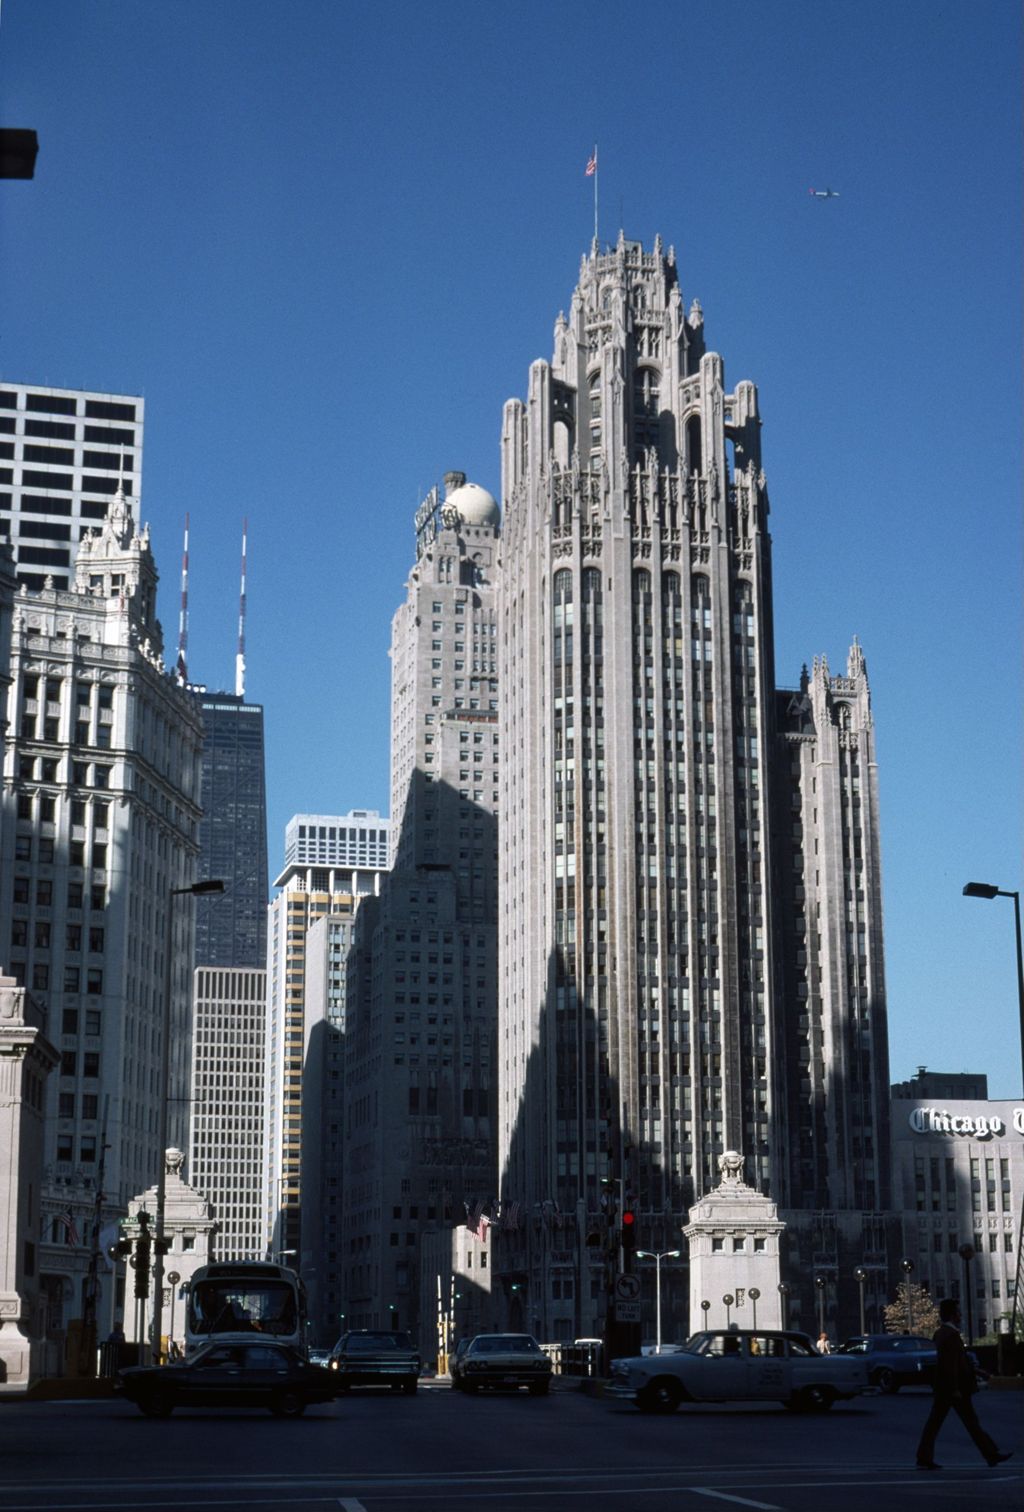 Miniature of Chicago Tribune Building and North Michigan Avenue